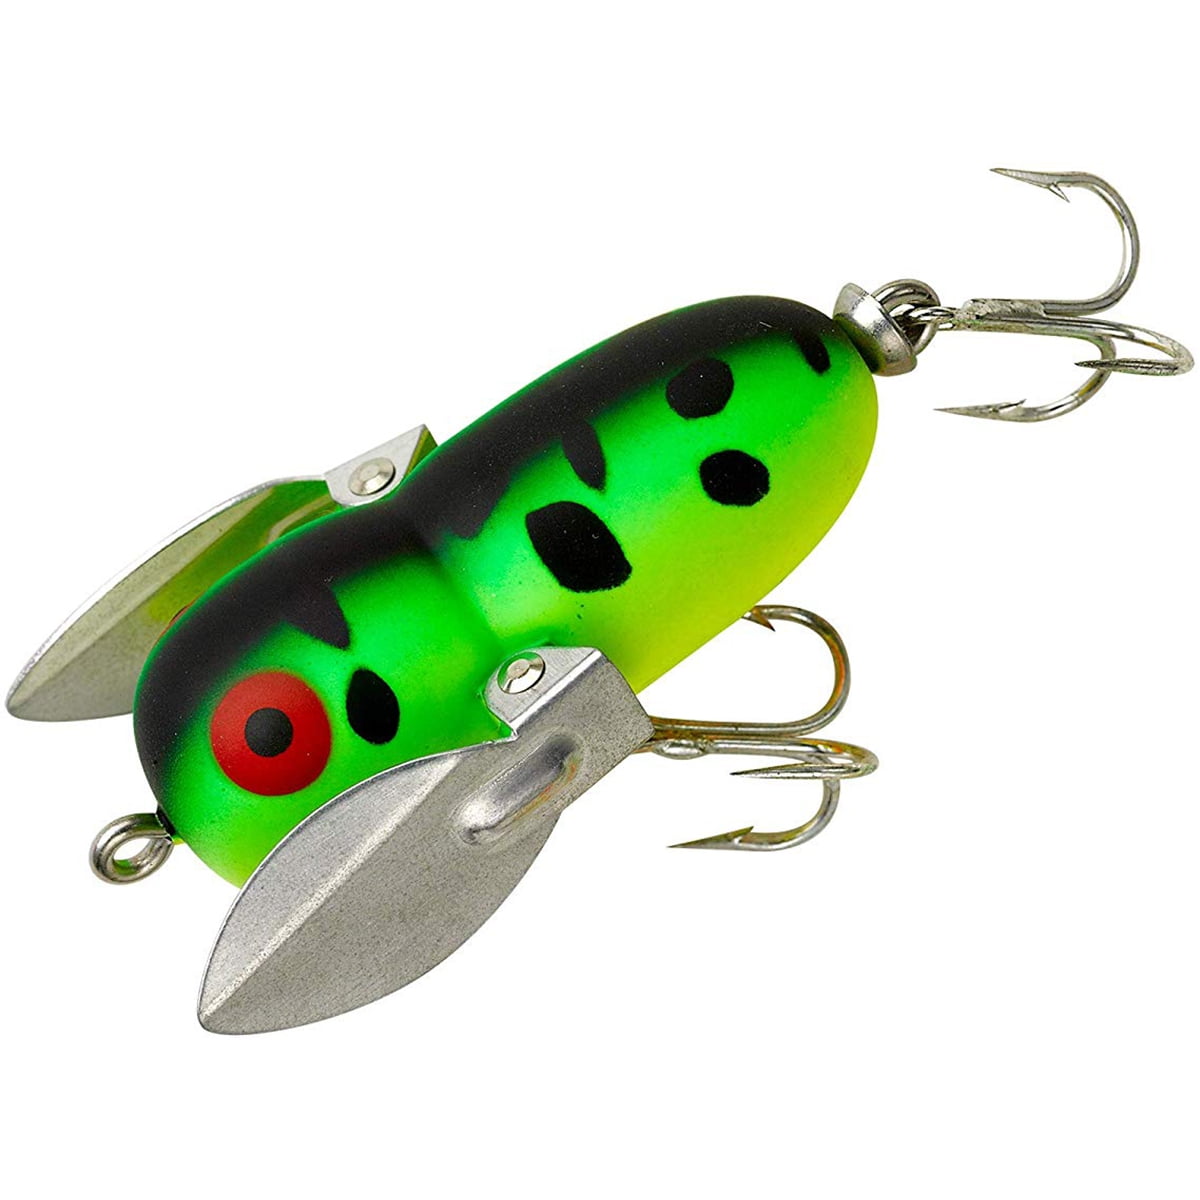 Heddon Tiny Crazy Crawler 1/4 oz Fishing Lure - Fluorescent Green